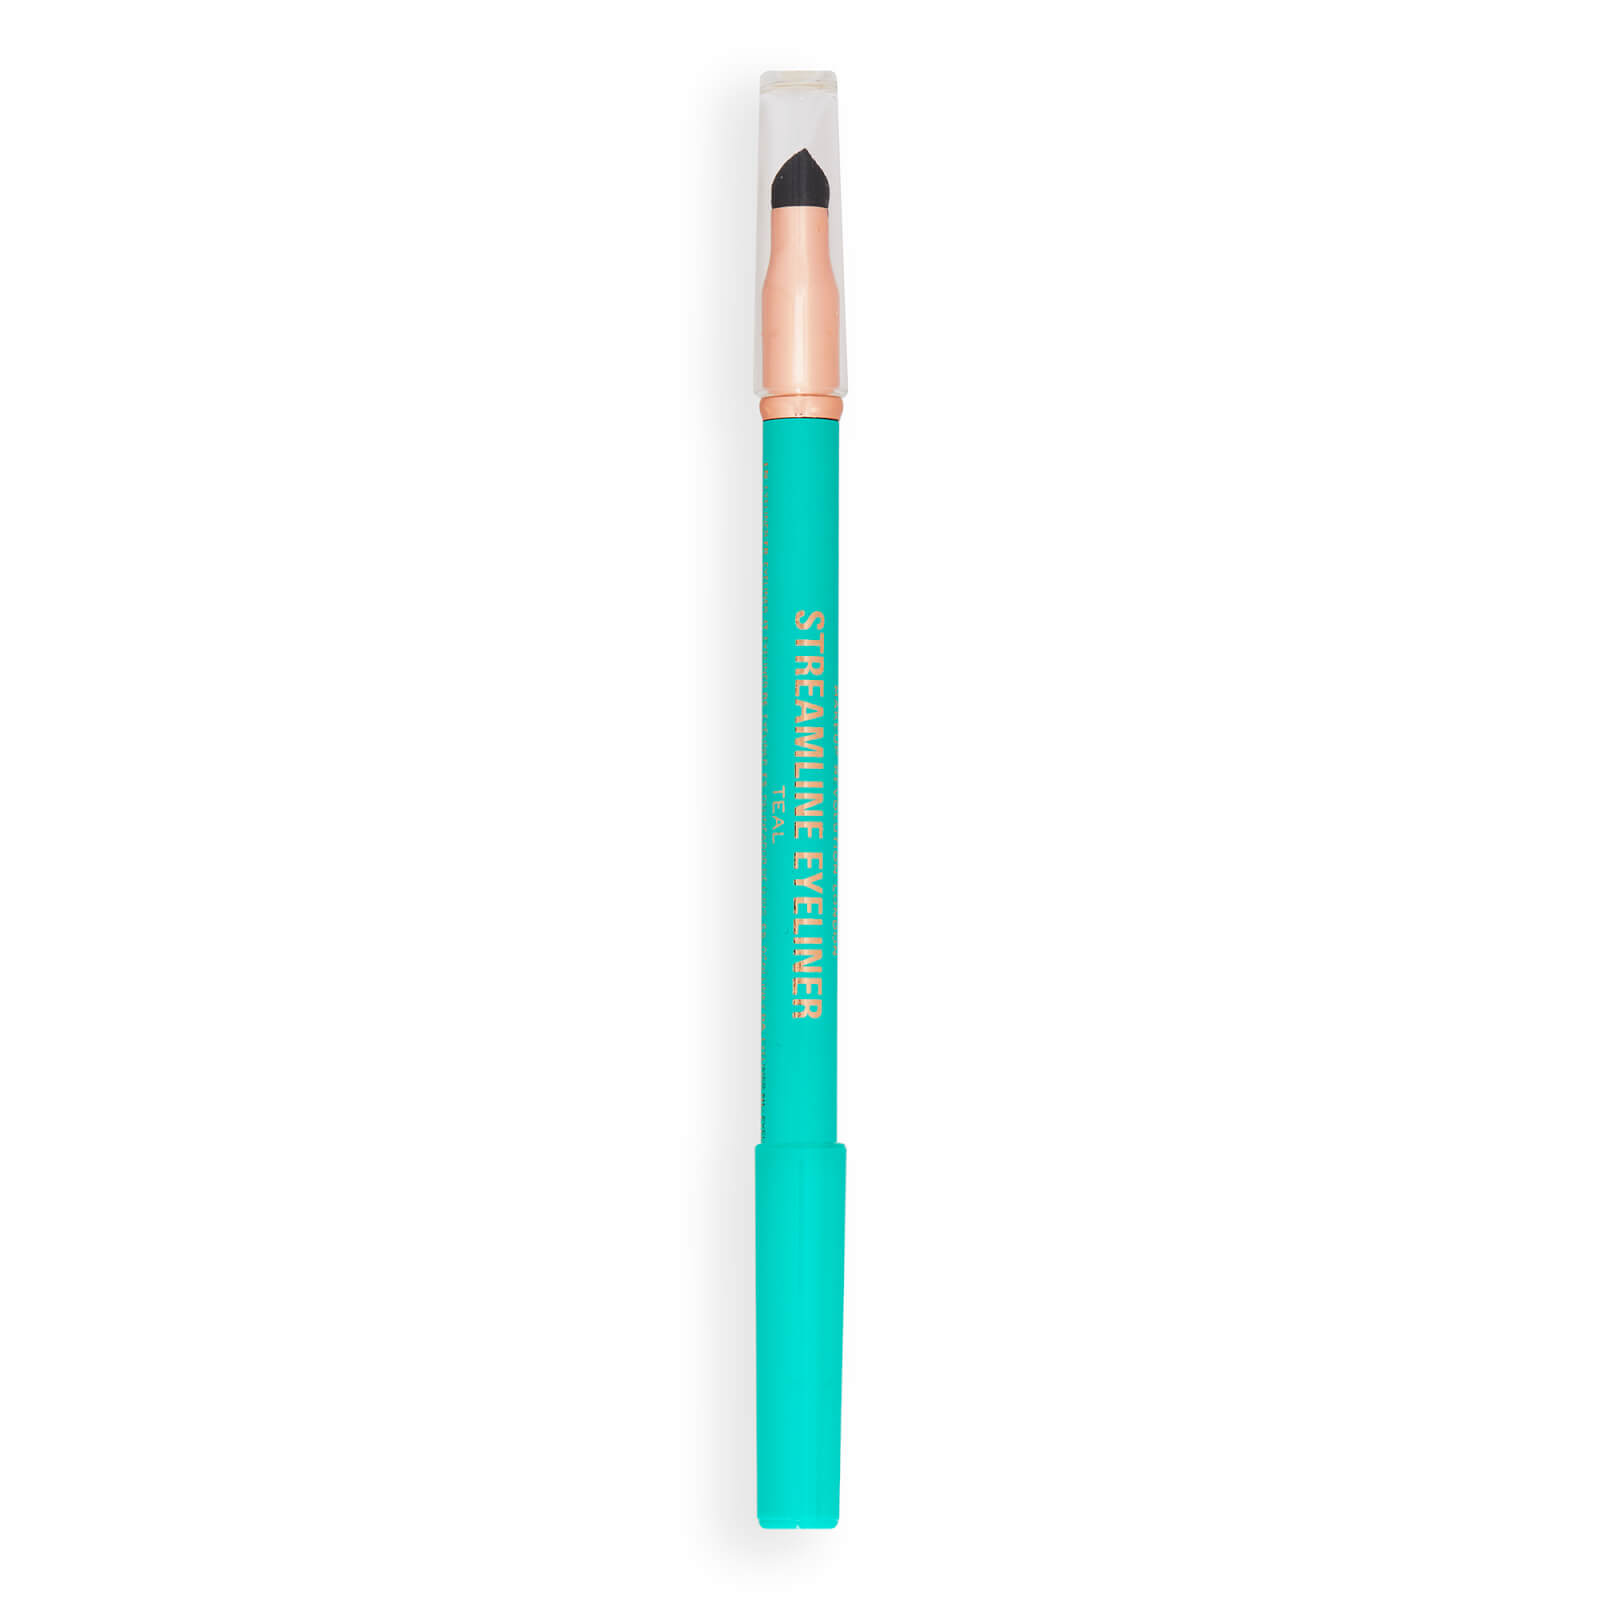 Makeup Revolution Streamline Waterline Eyeliner Pencil (Various Shades) - Teal